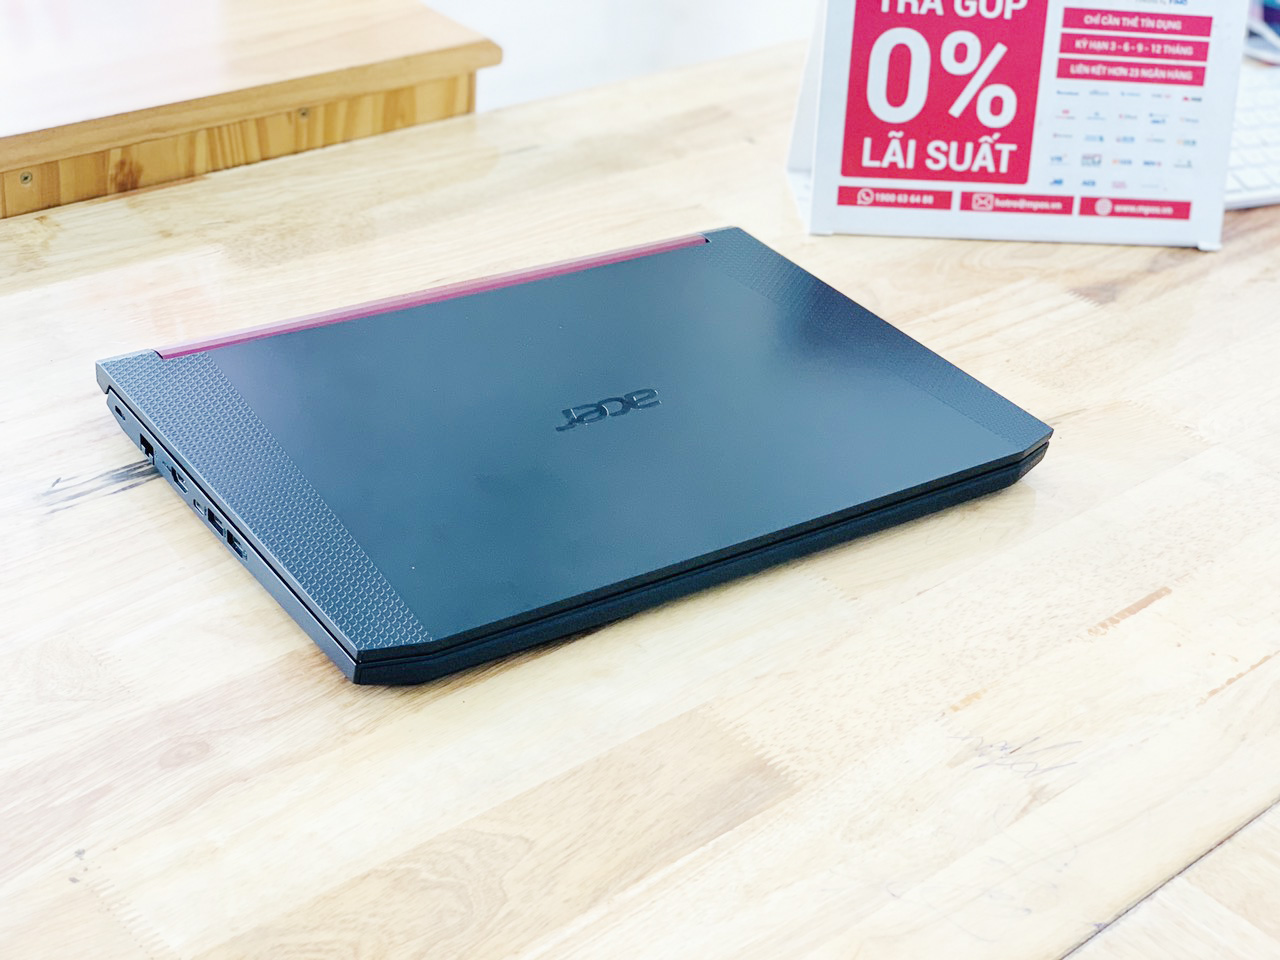 Laptop Gaming Acer Nitro AN515-54 i5-9300H Ram 8G SSD 256G Nvidia GTX 1050(3G) 15.6 inch Full HD